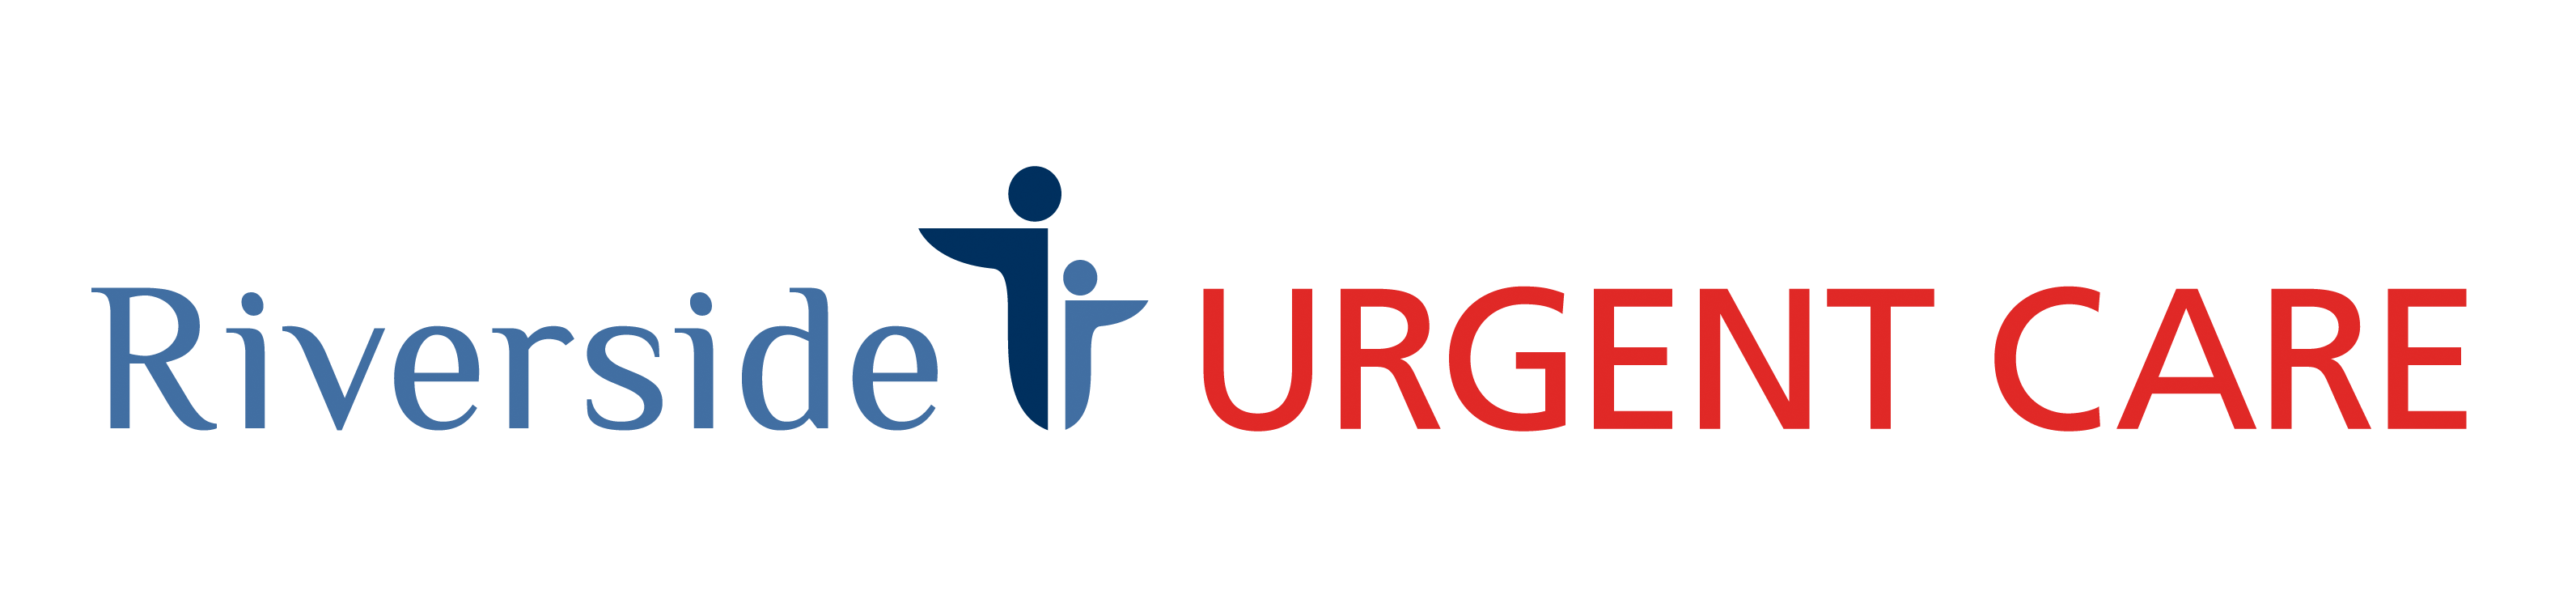 Riverside Urgent Care - Woodbury Logo